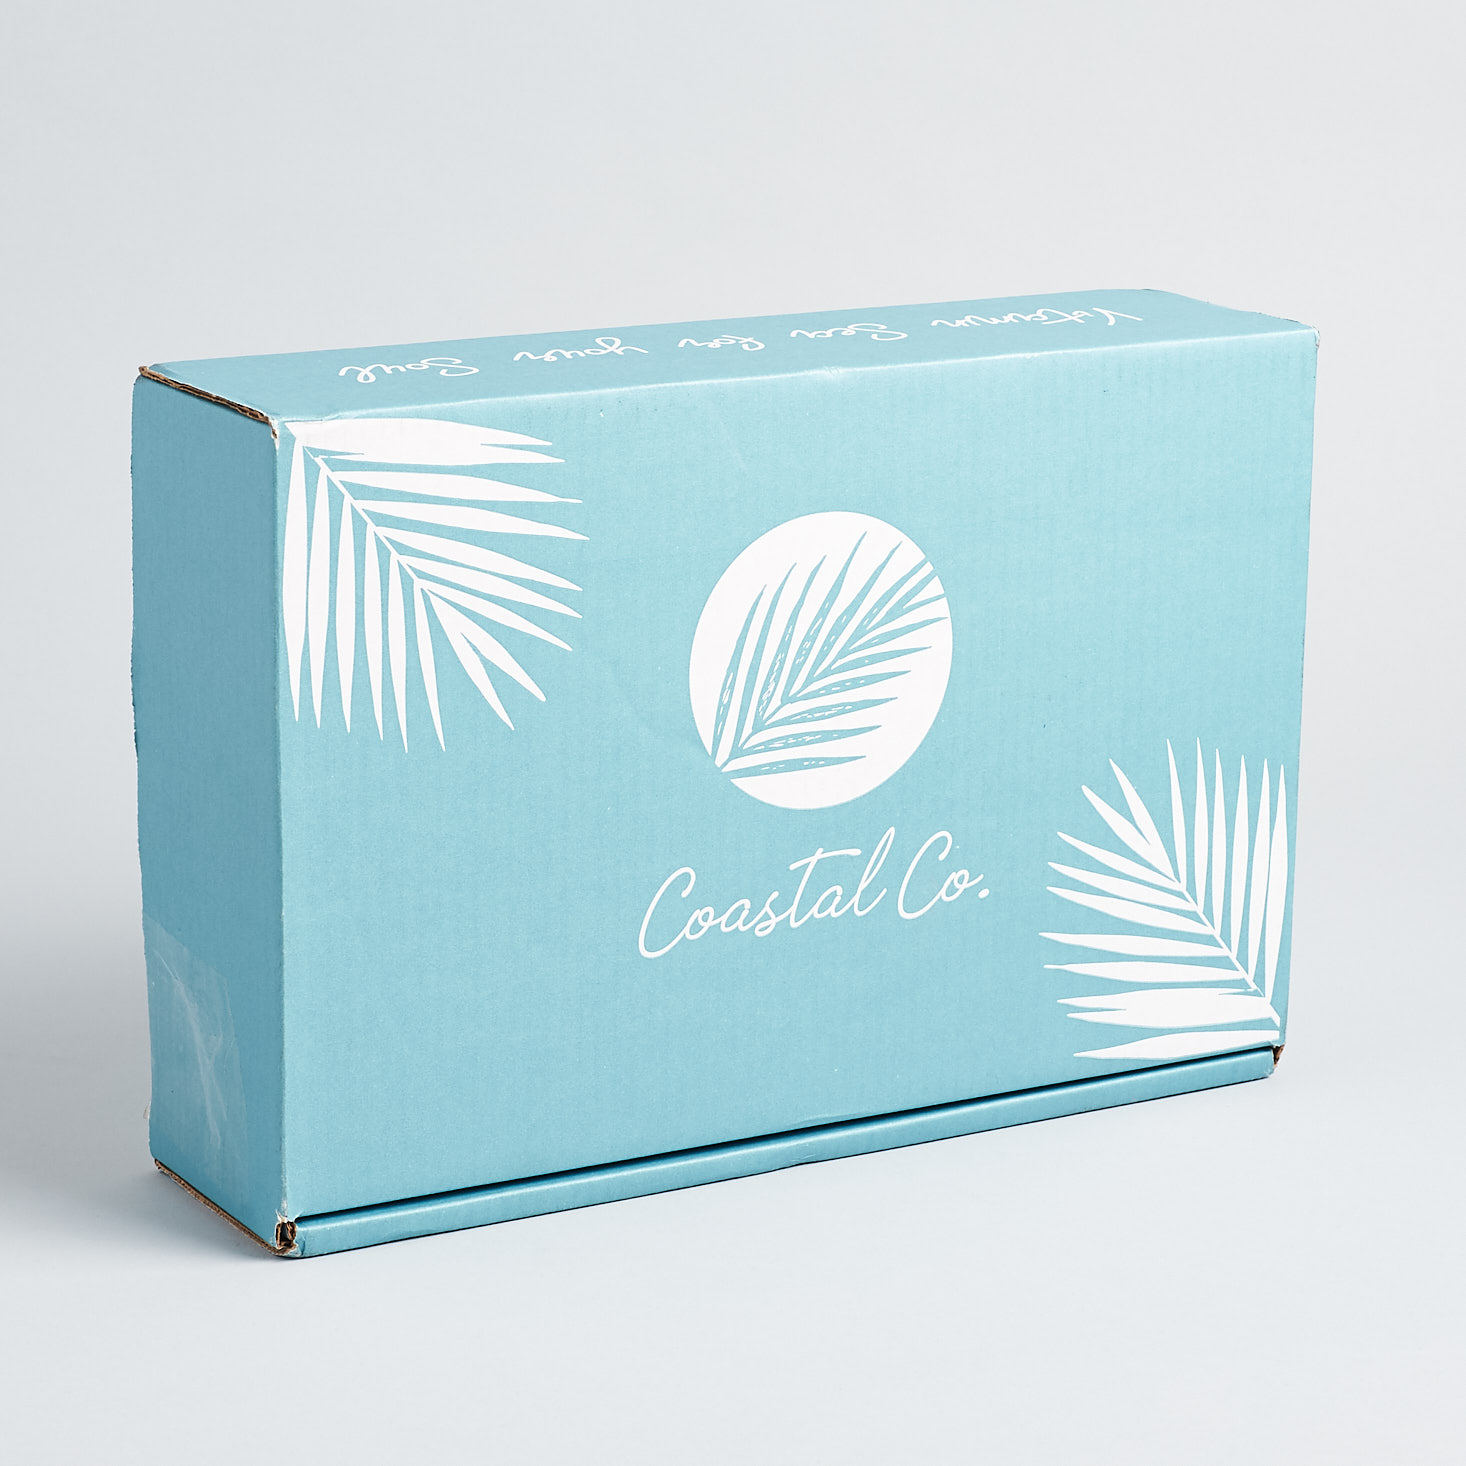 Coastal Co. Subscription Box Review + Coupon – Summer 2019